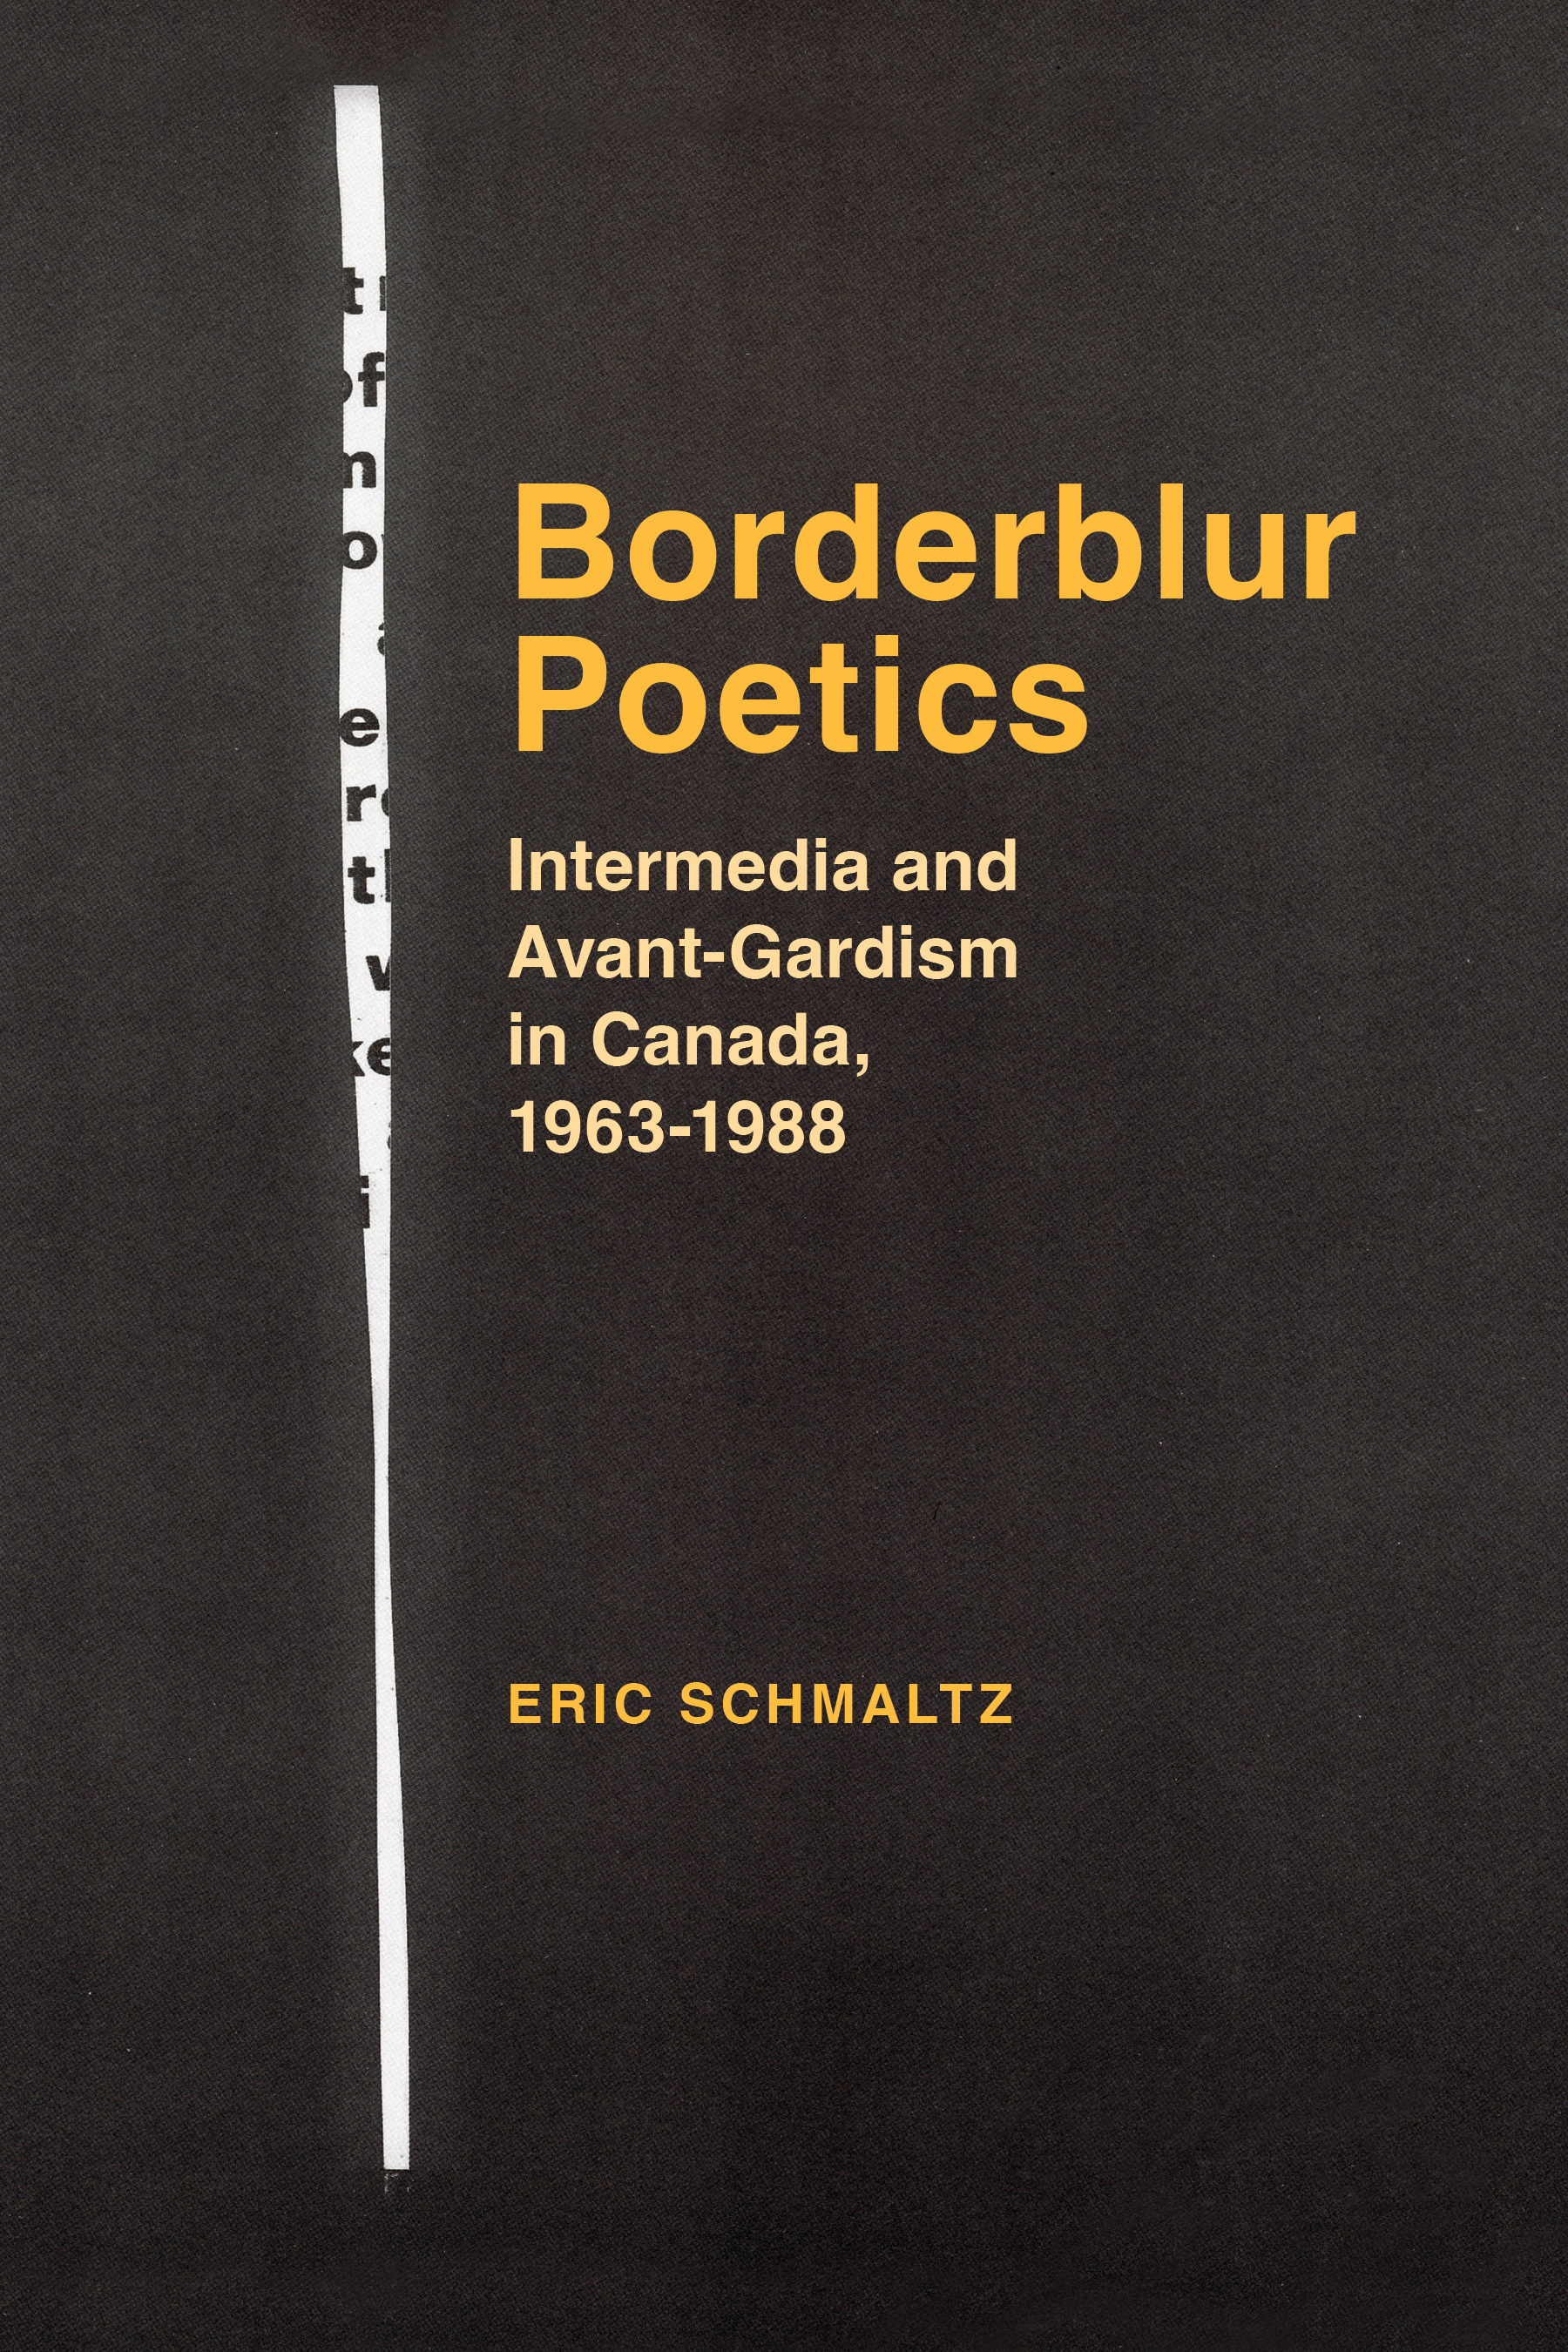 Book cover image for: Borderblur Poetics